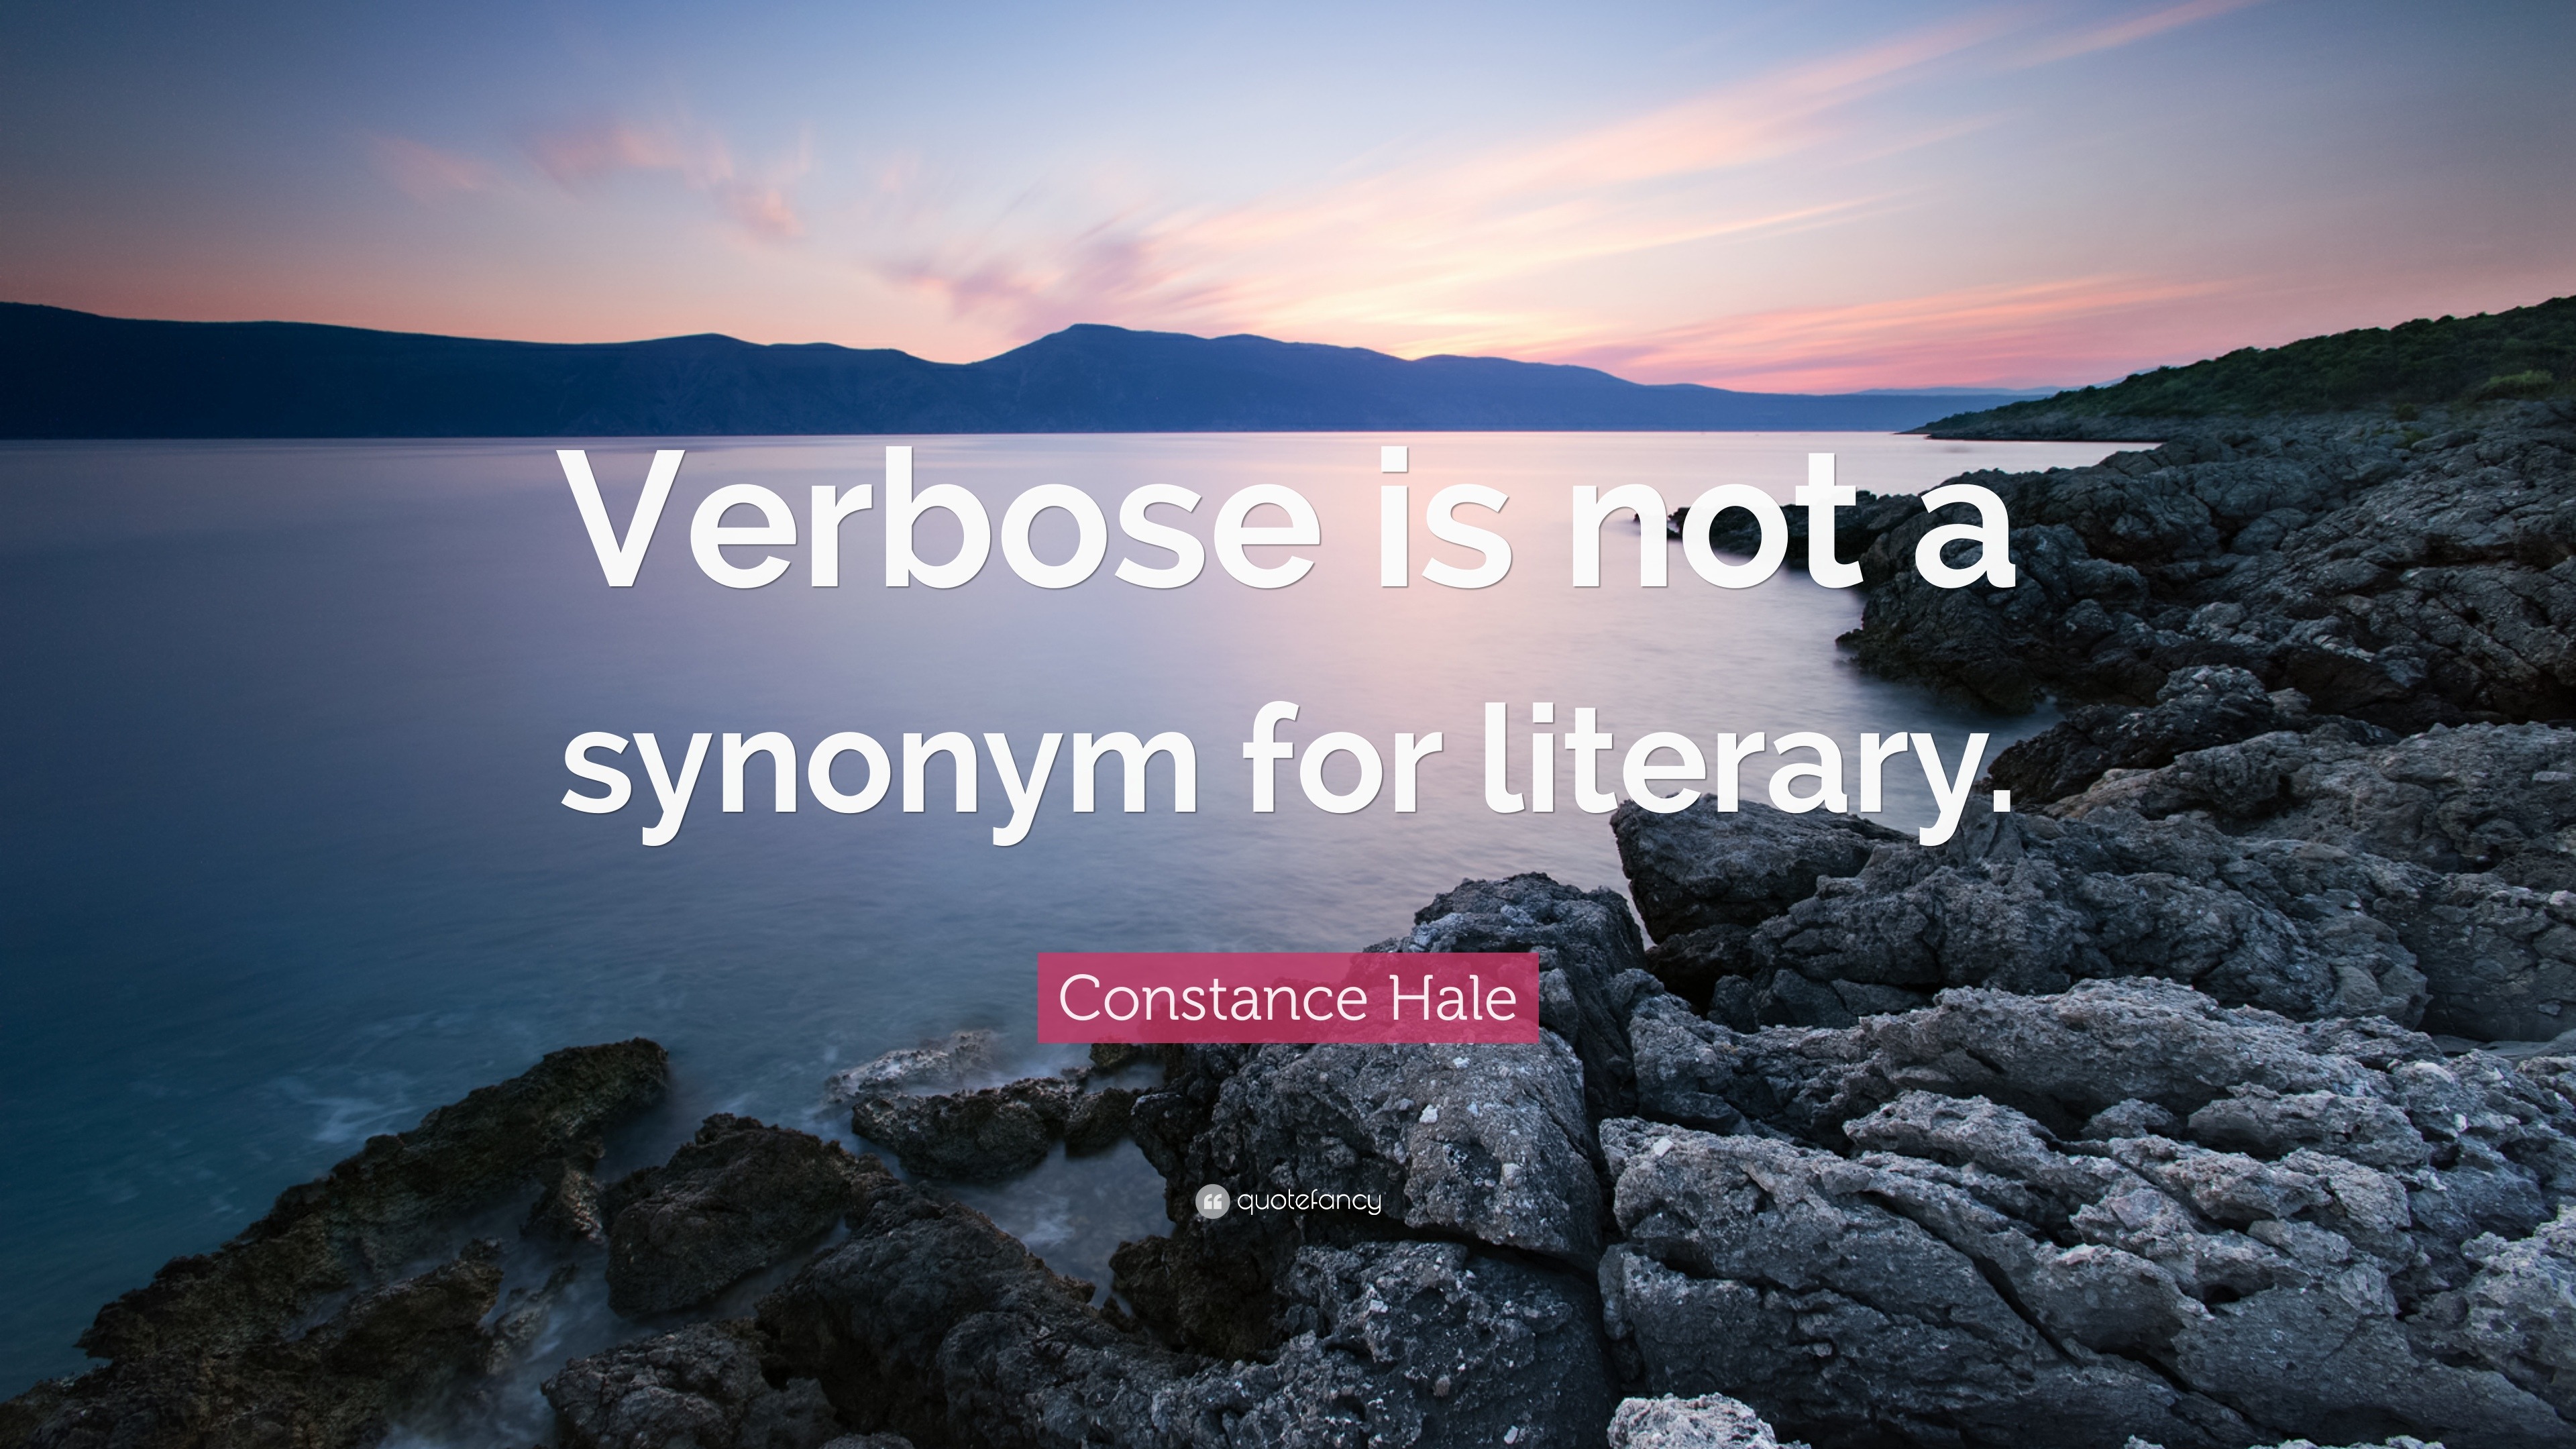 the literary synonym